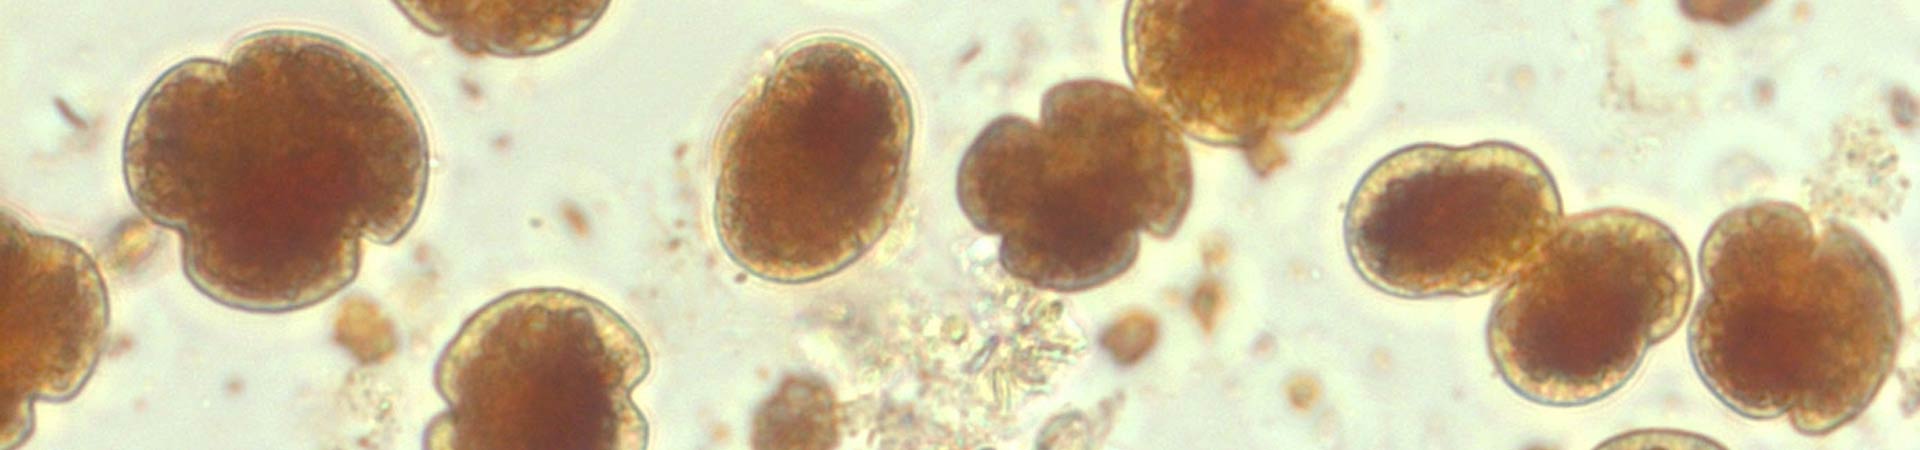 Microscopic image of harmful algal bloom phytoplankton